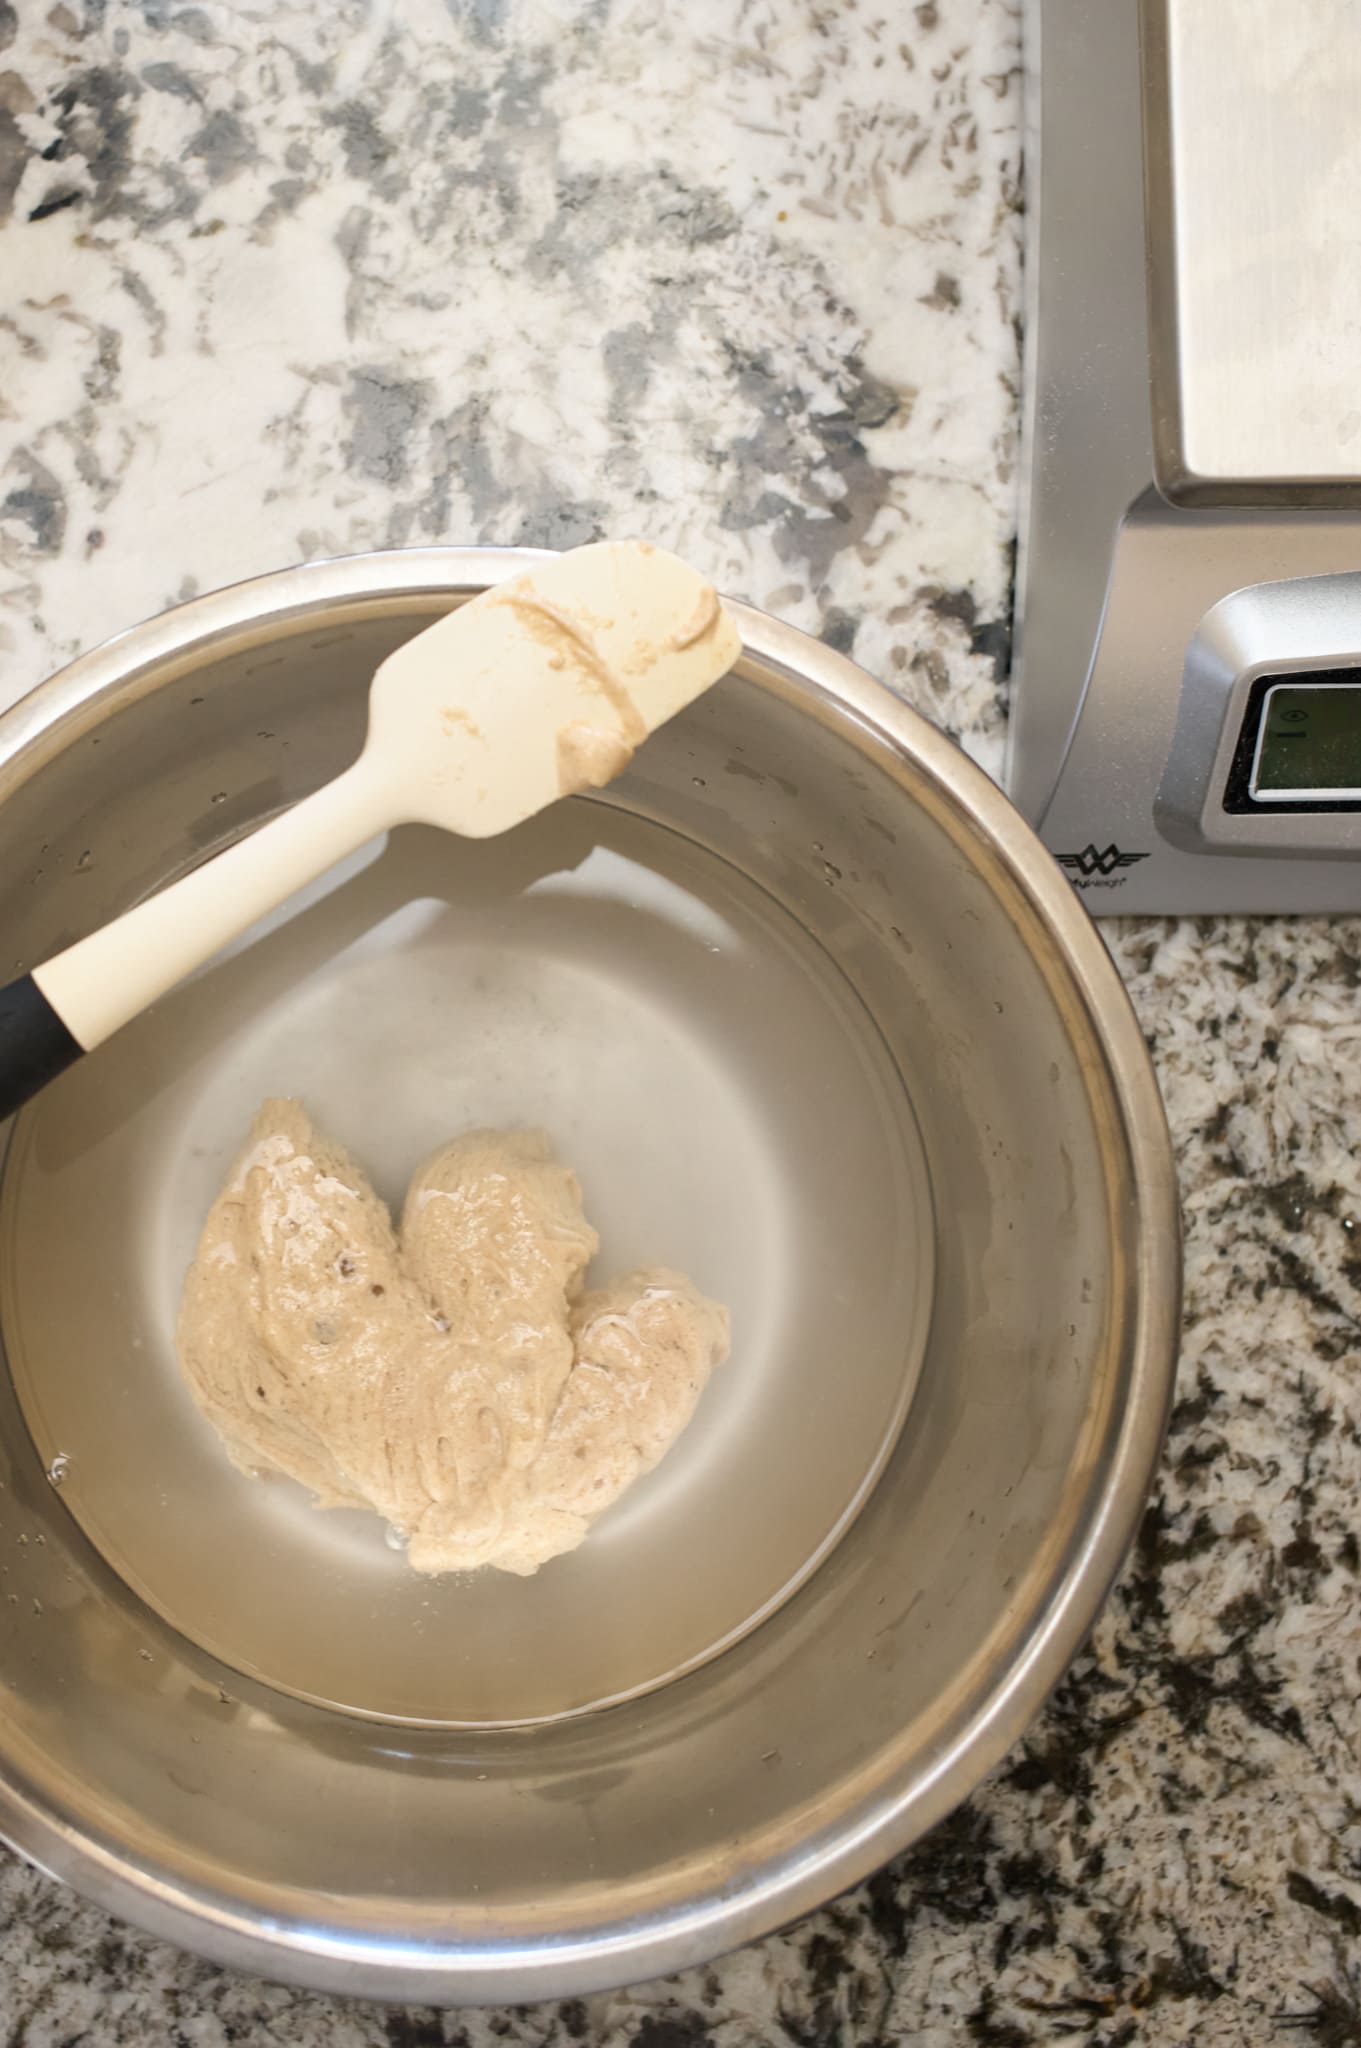 Dissolving the sourdough starter in water.